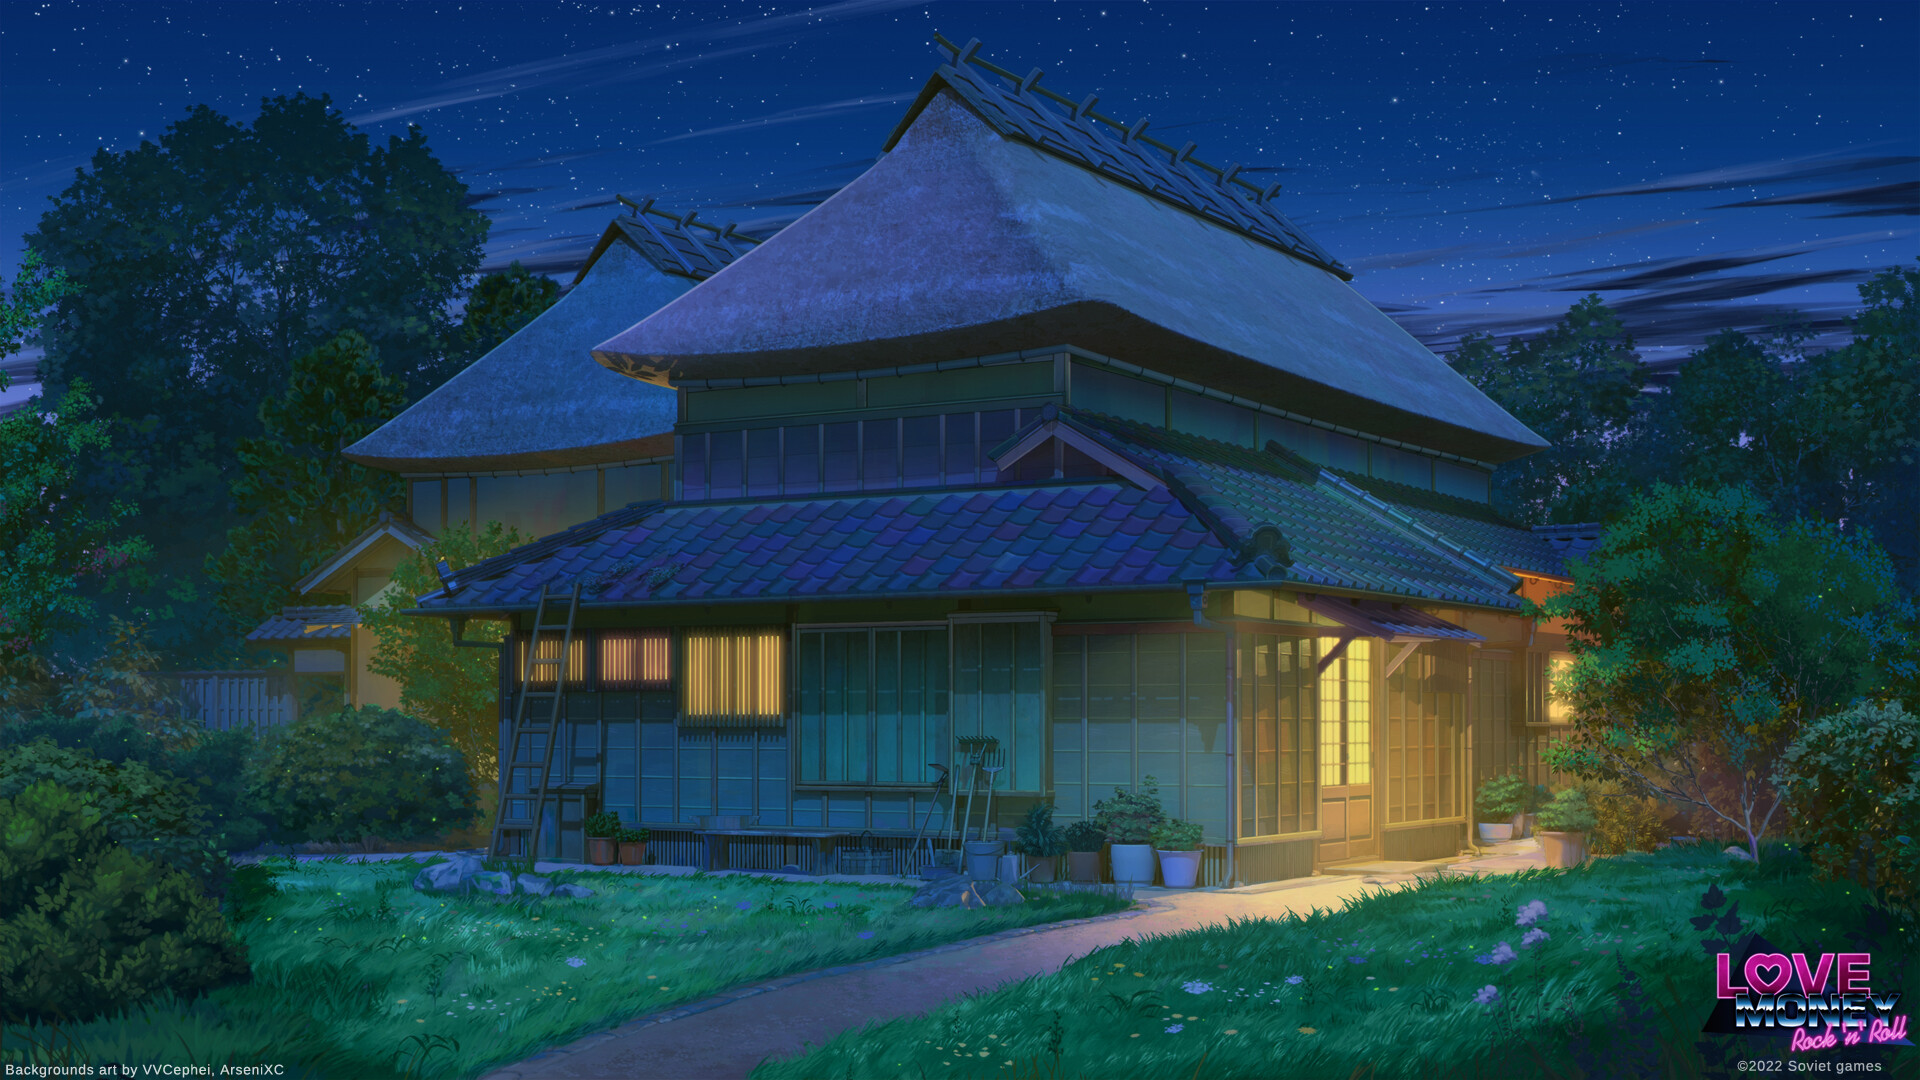 Japanese village house by arsenixc on DeviantArt